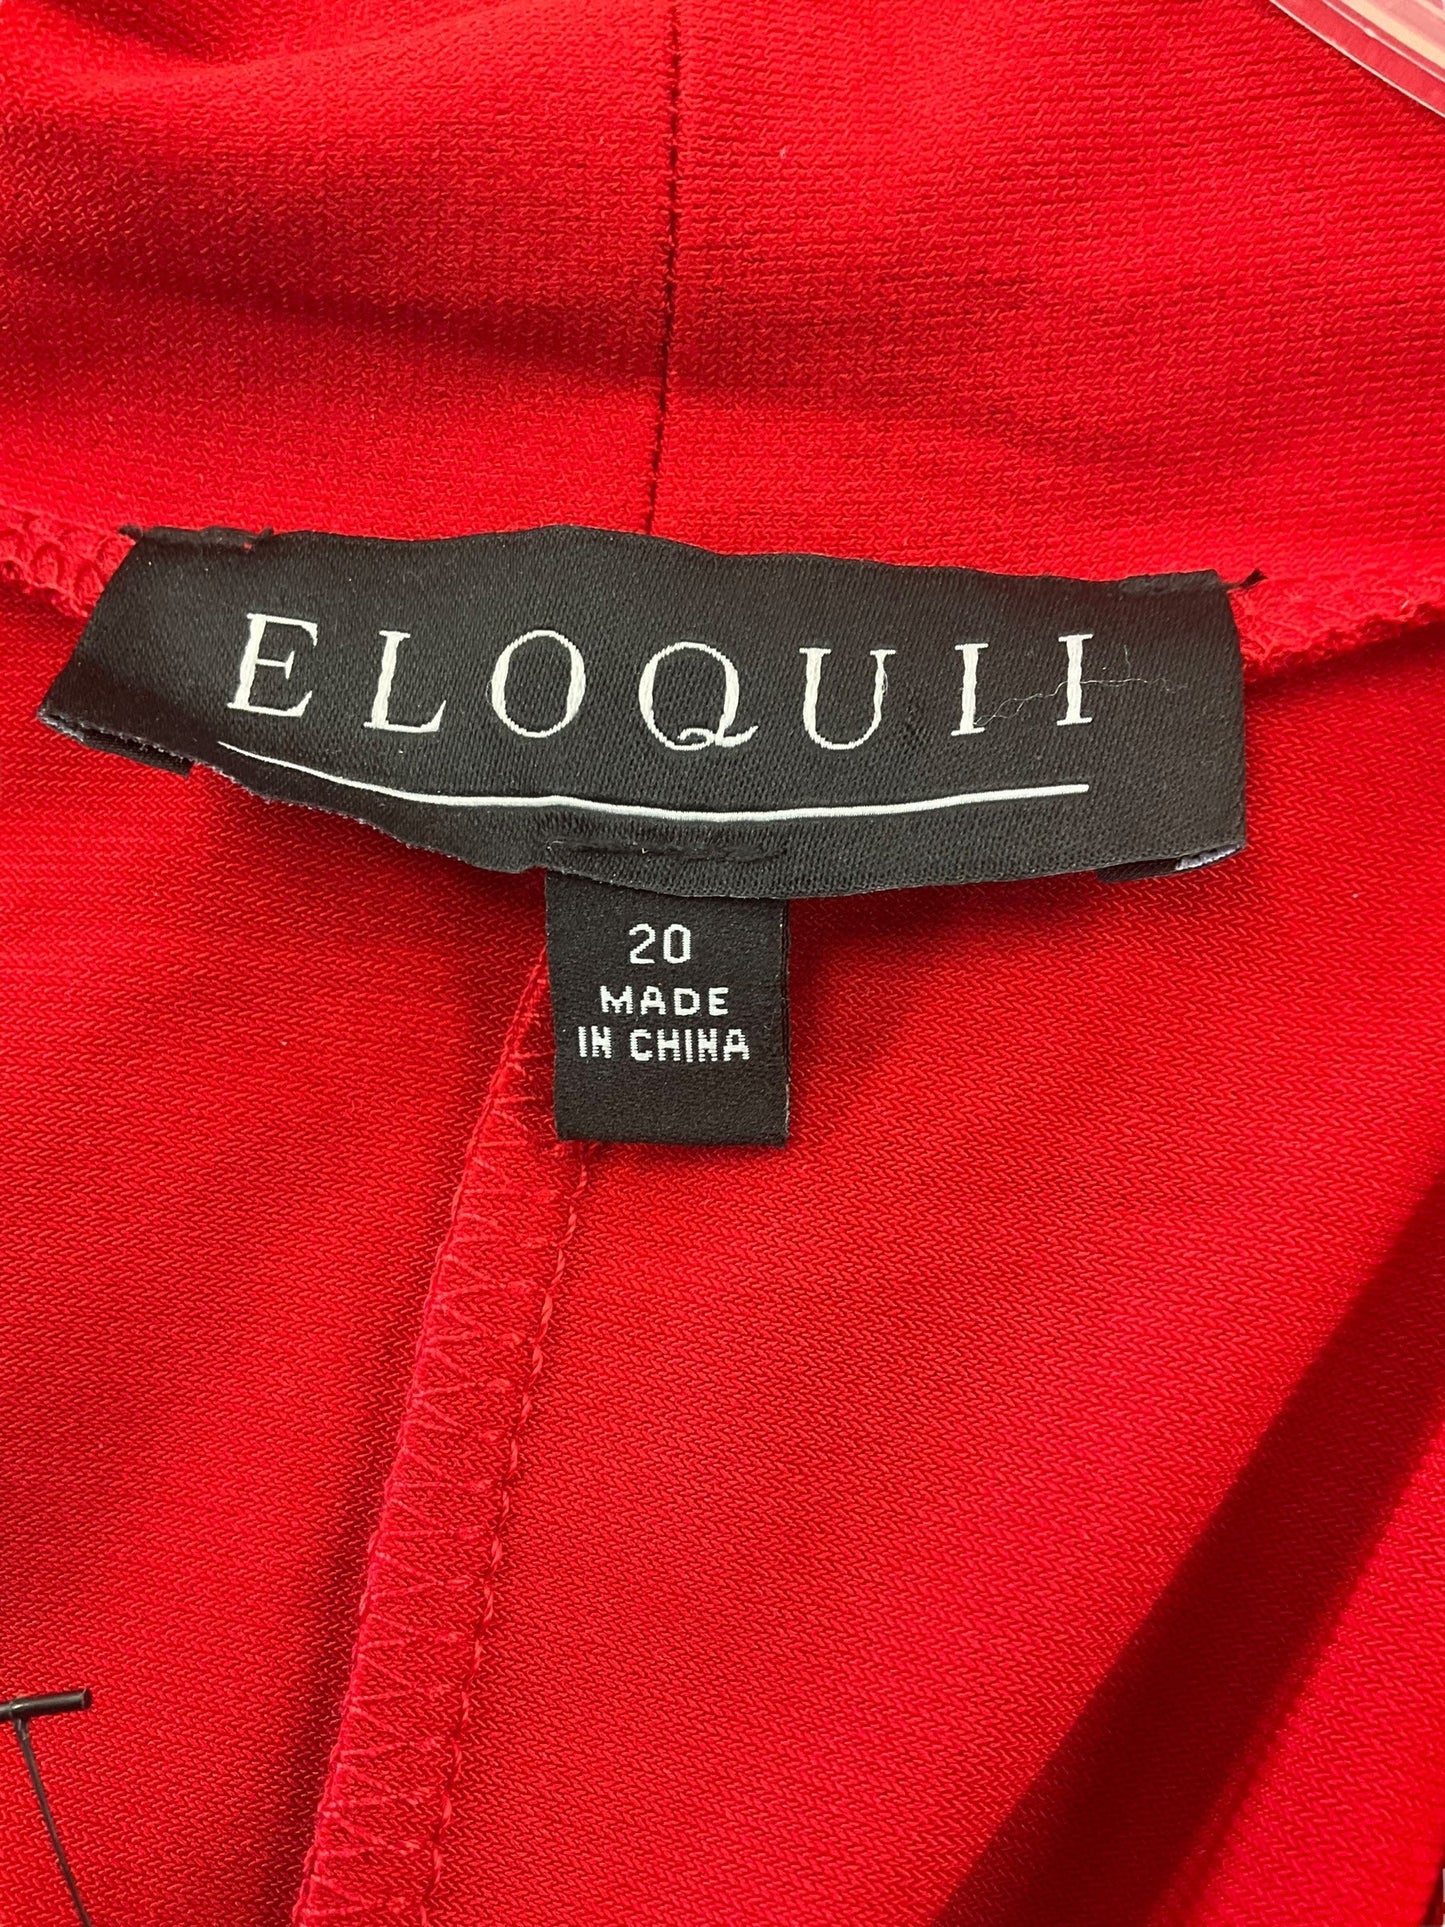 Red Dress Casual Maxi Eloquii, Size 2x